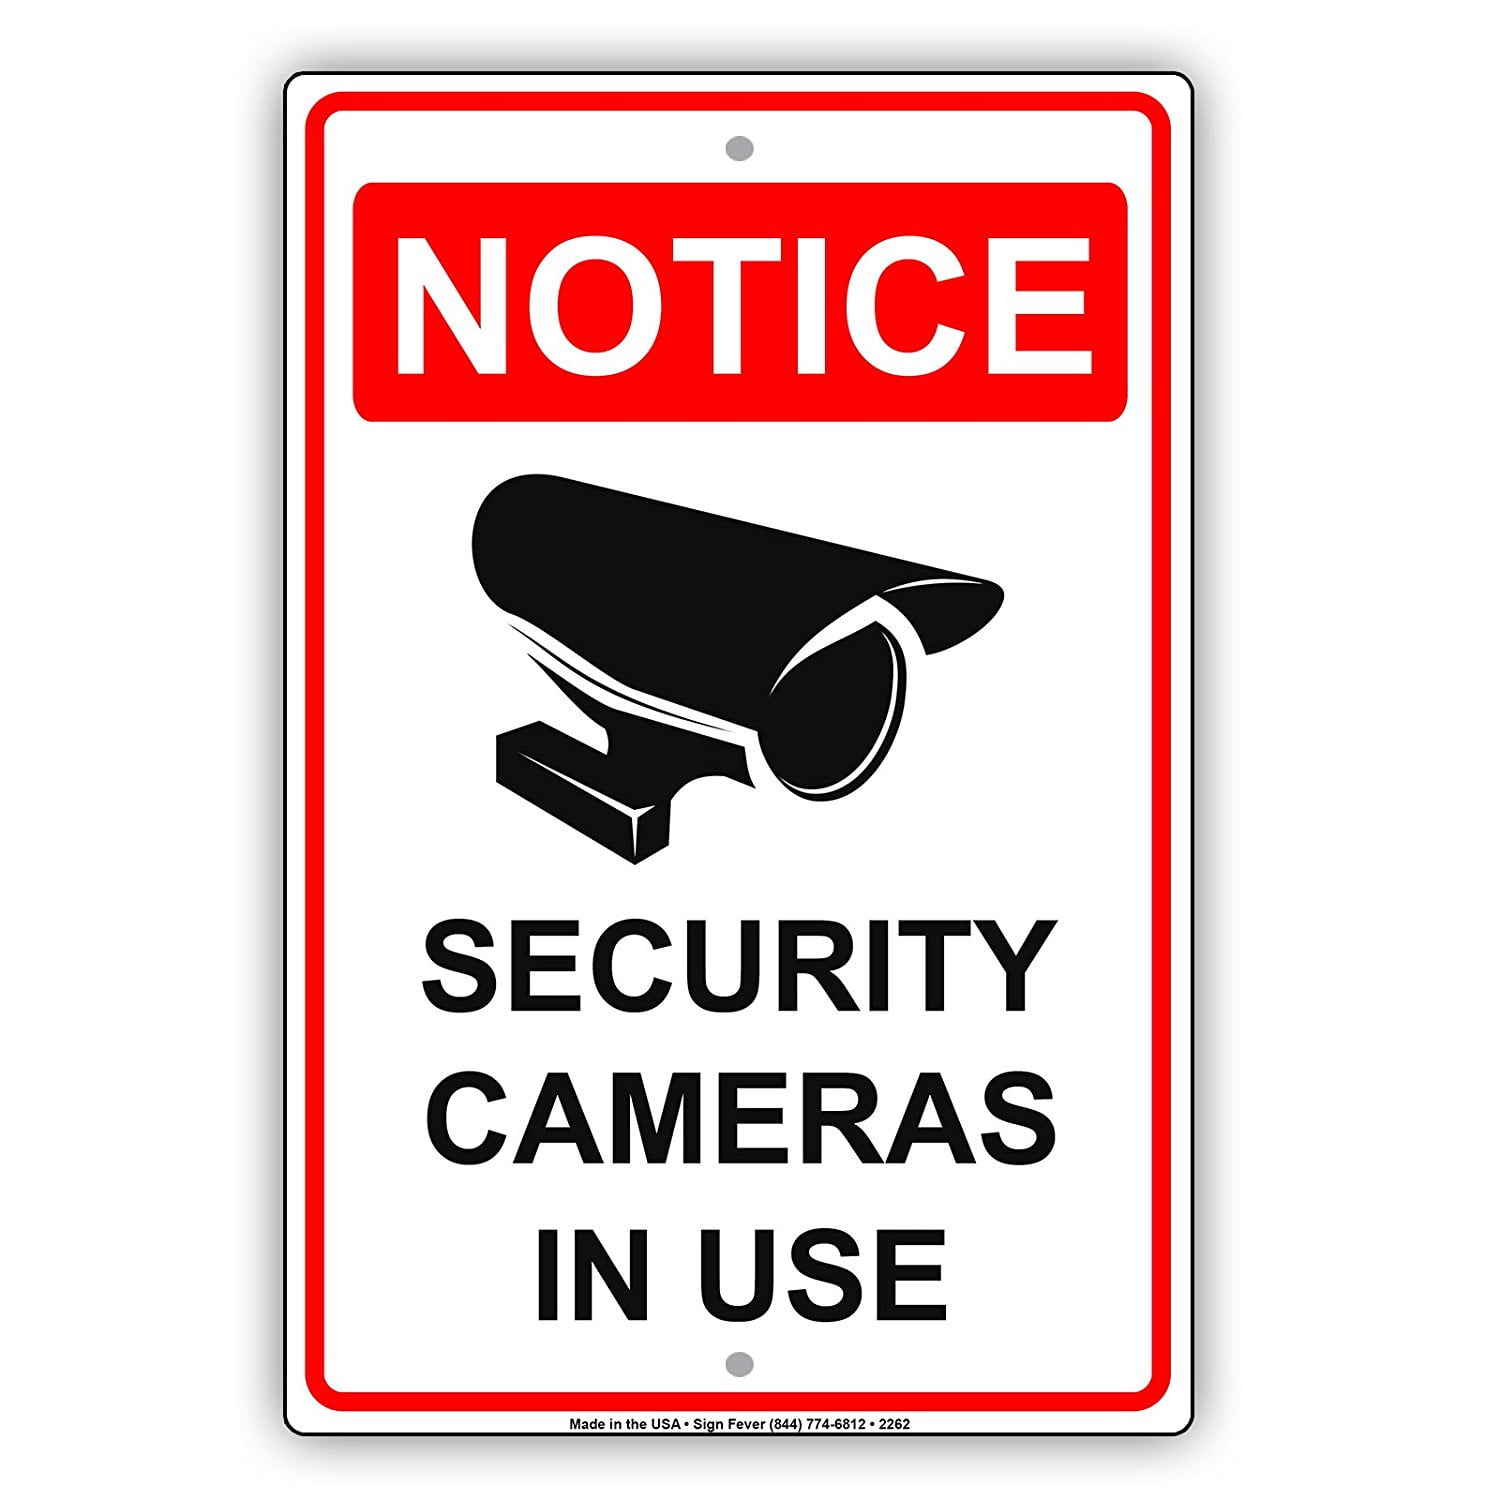 WARNING NOTICE 24 HOUR VIDEO SURVEILLANCE SIGN ALUMINUM METAL SECURITY CAMERA TV 